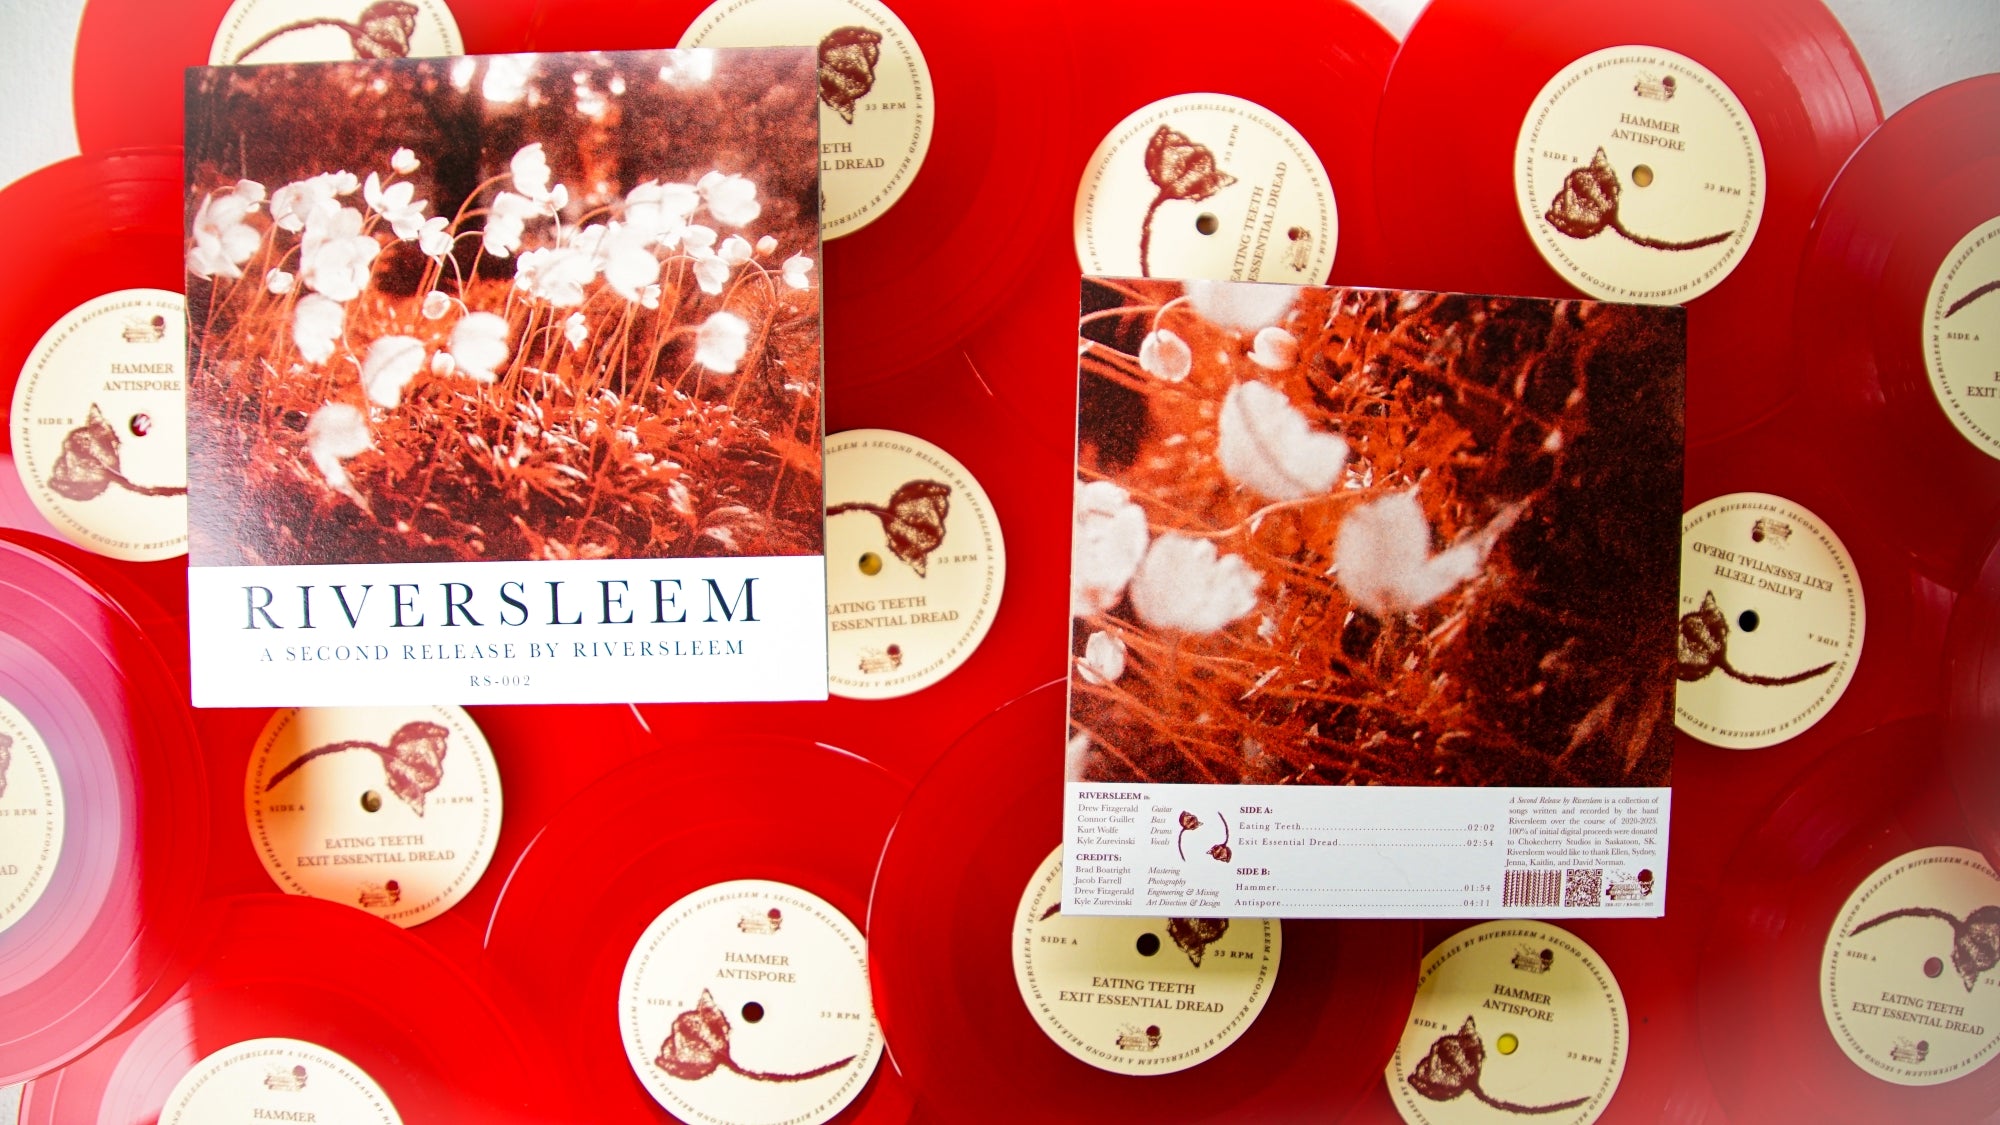 RIVERSLEEM - ‘A Second Release by Riversleem’ EP (7")